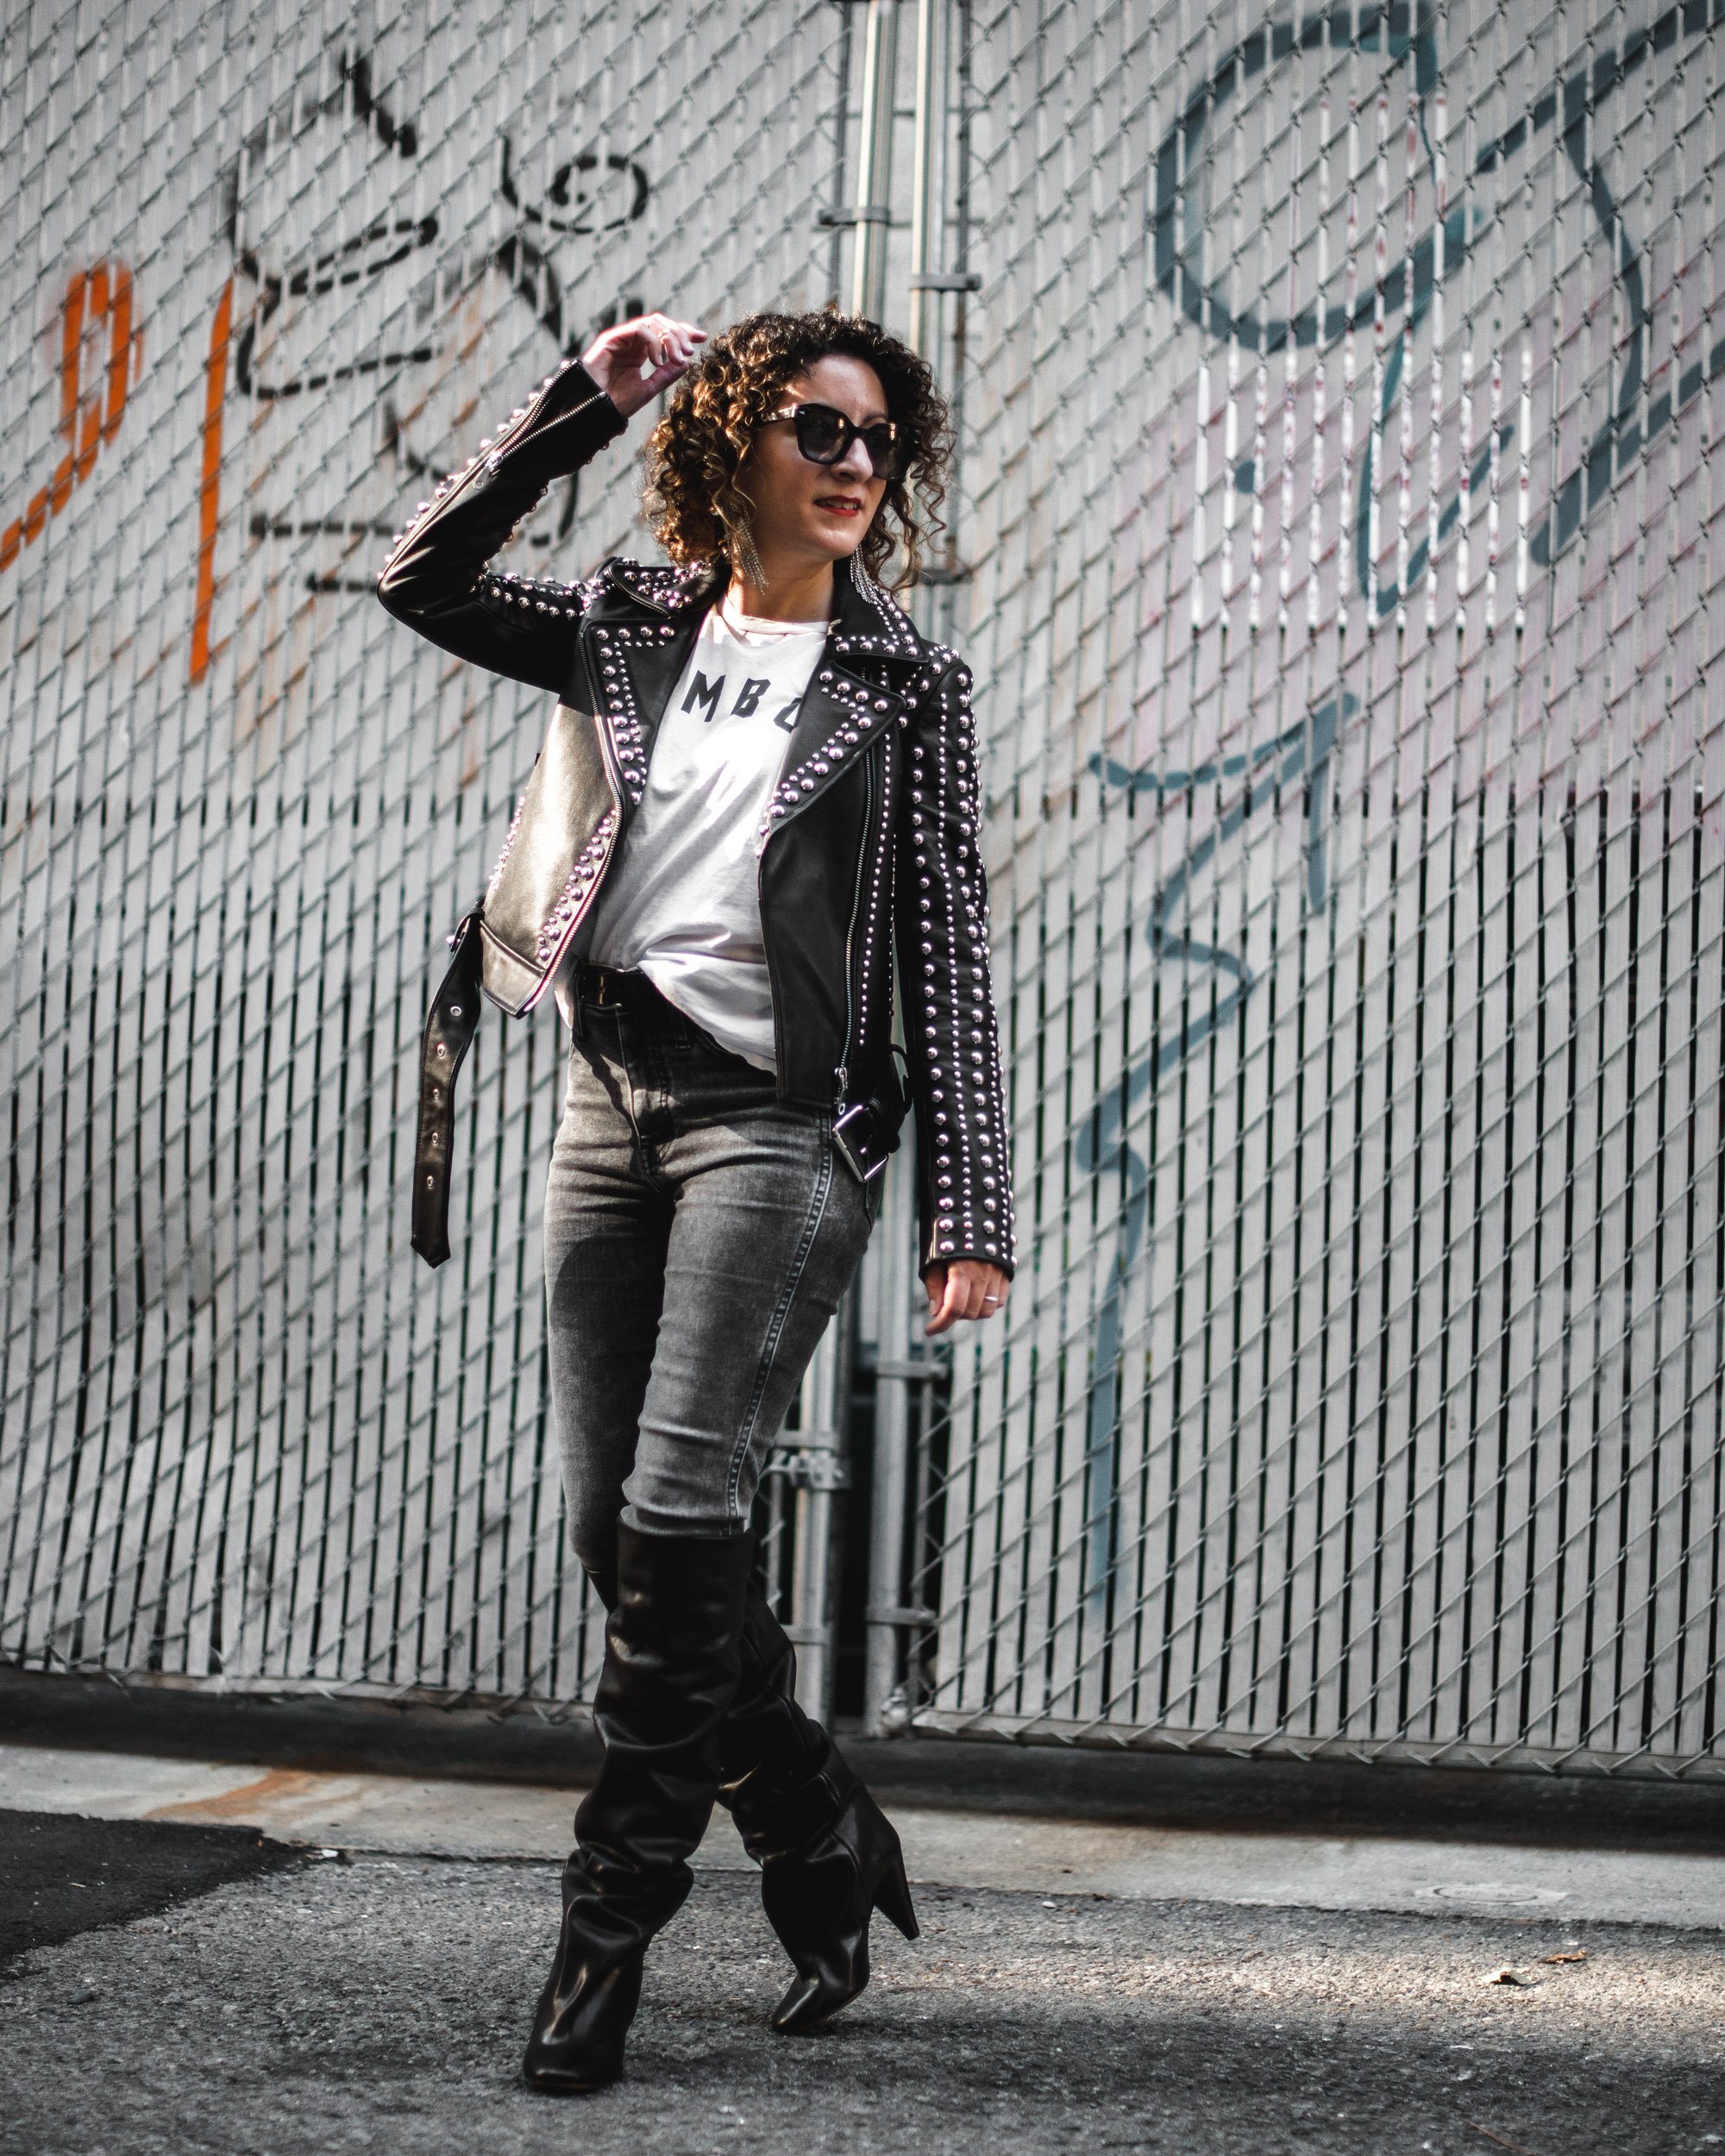 rebecca-minkoff-studded-jacket-outfit-street-style.jpg